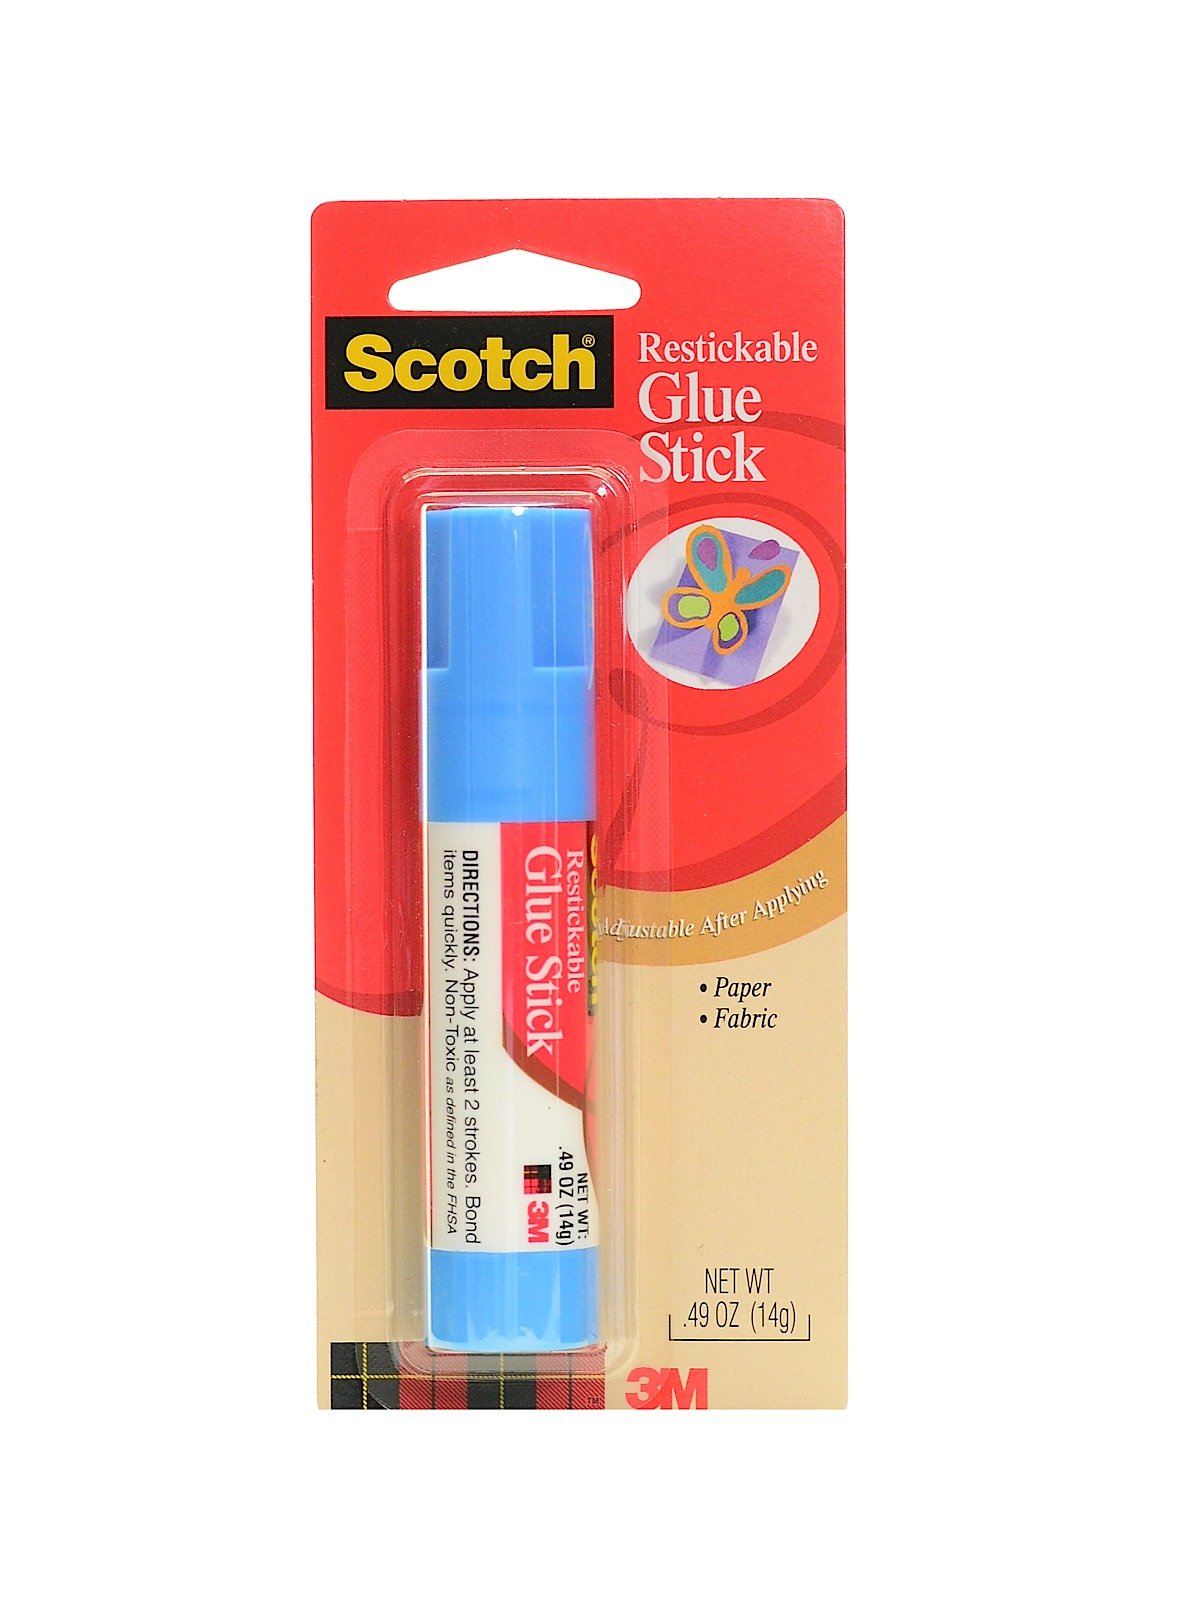 3M - Scotch Glue Stick Restickable Adhesive